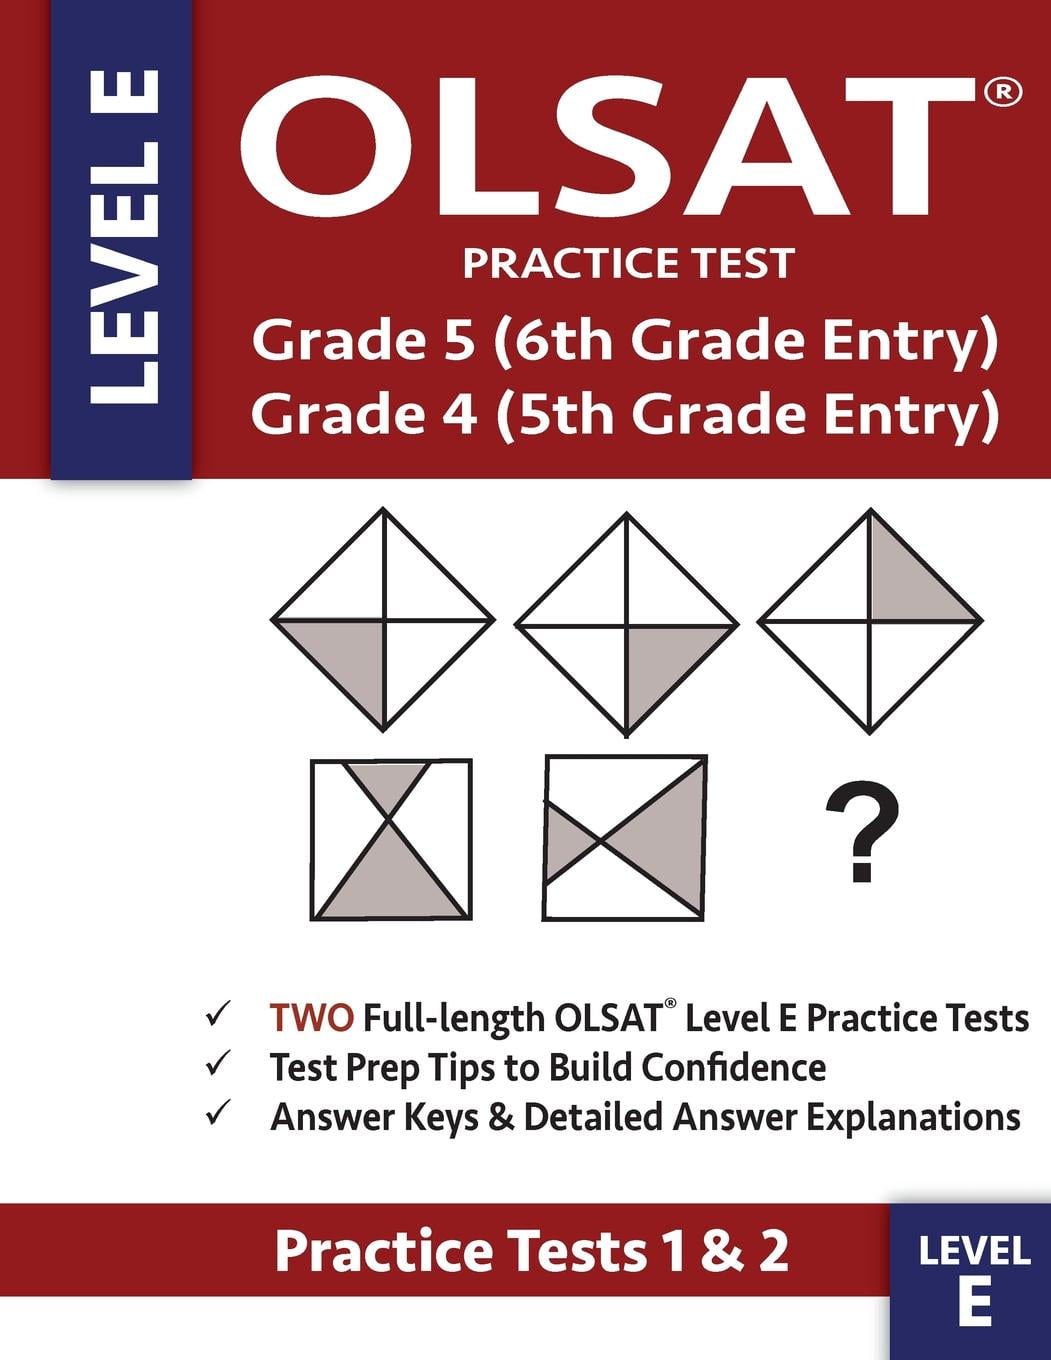 OLSAT Practice Test Grade 5 (6th Grade Entry) & Grade 4 (5th Grade Entry) -  Level E -: Two OLSAT E Practice Tests (PRACTICE TESTS ONE & TWO), Grade 